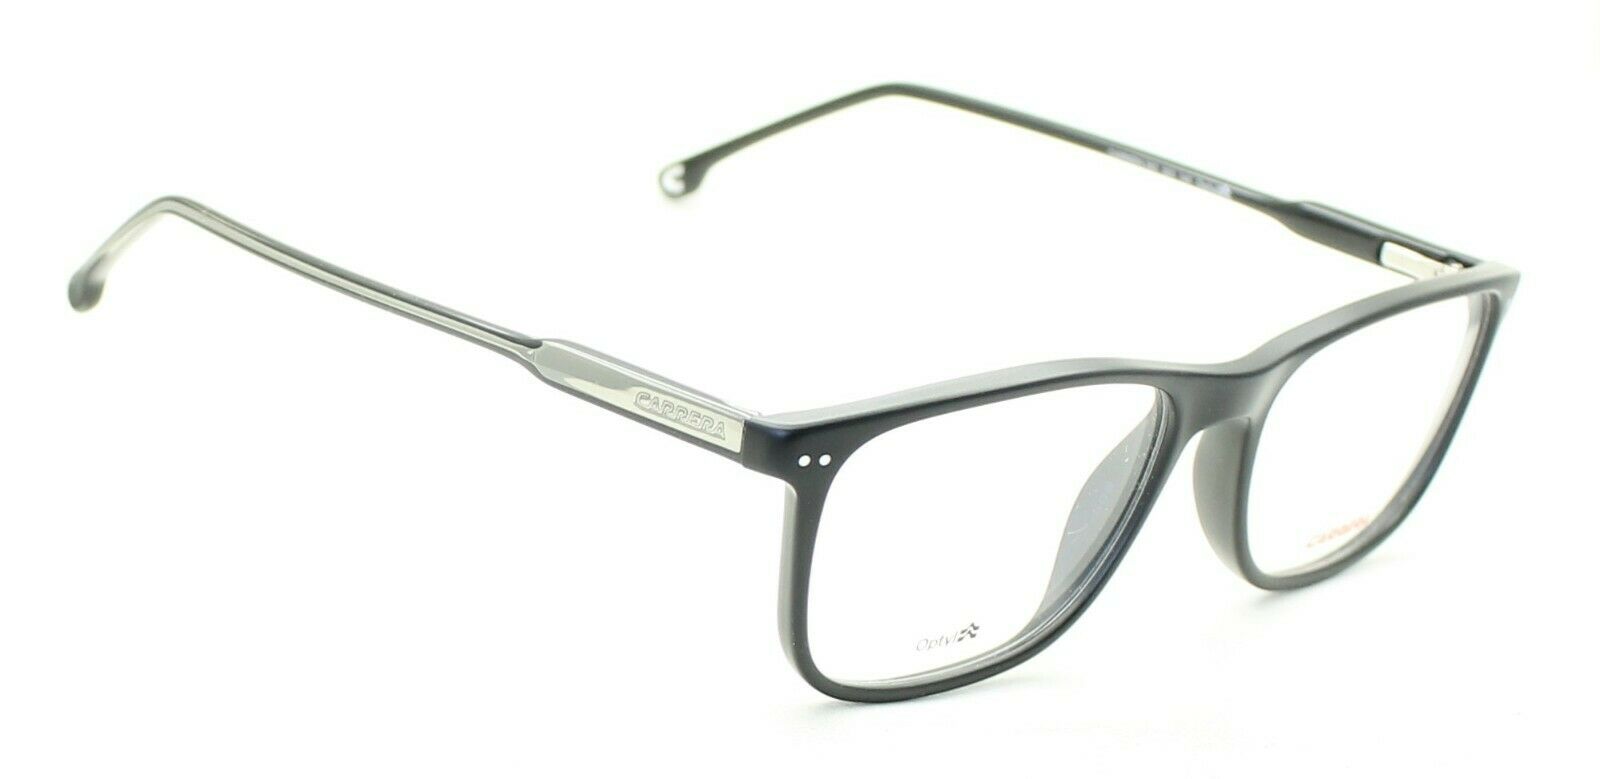 CARRERA 202 003 53mm Eyewear FRAMES Glasses RX Optical Eyeglasses New - TRUSTED